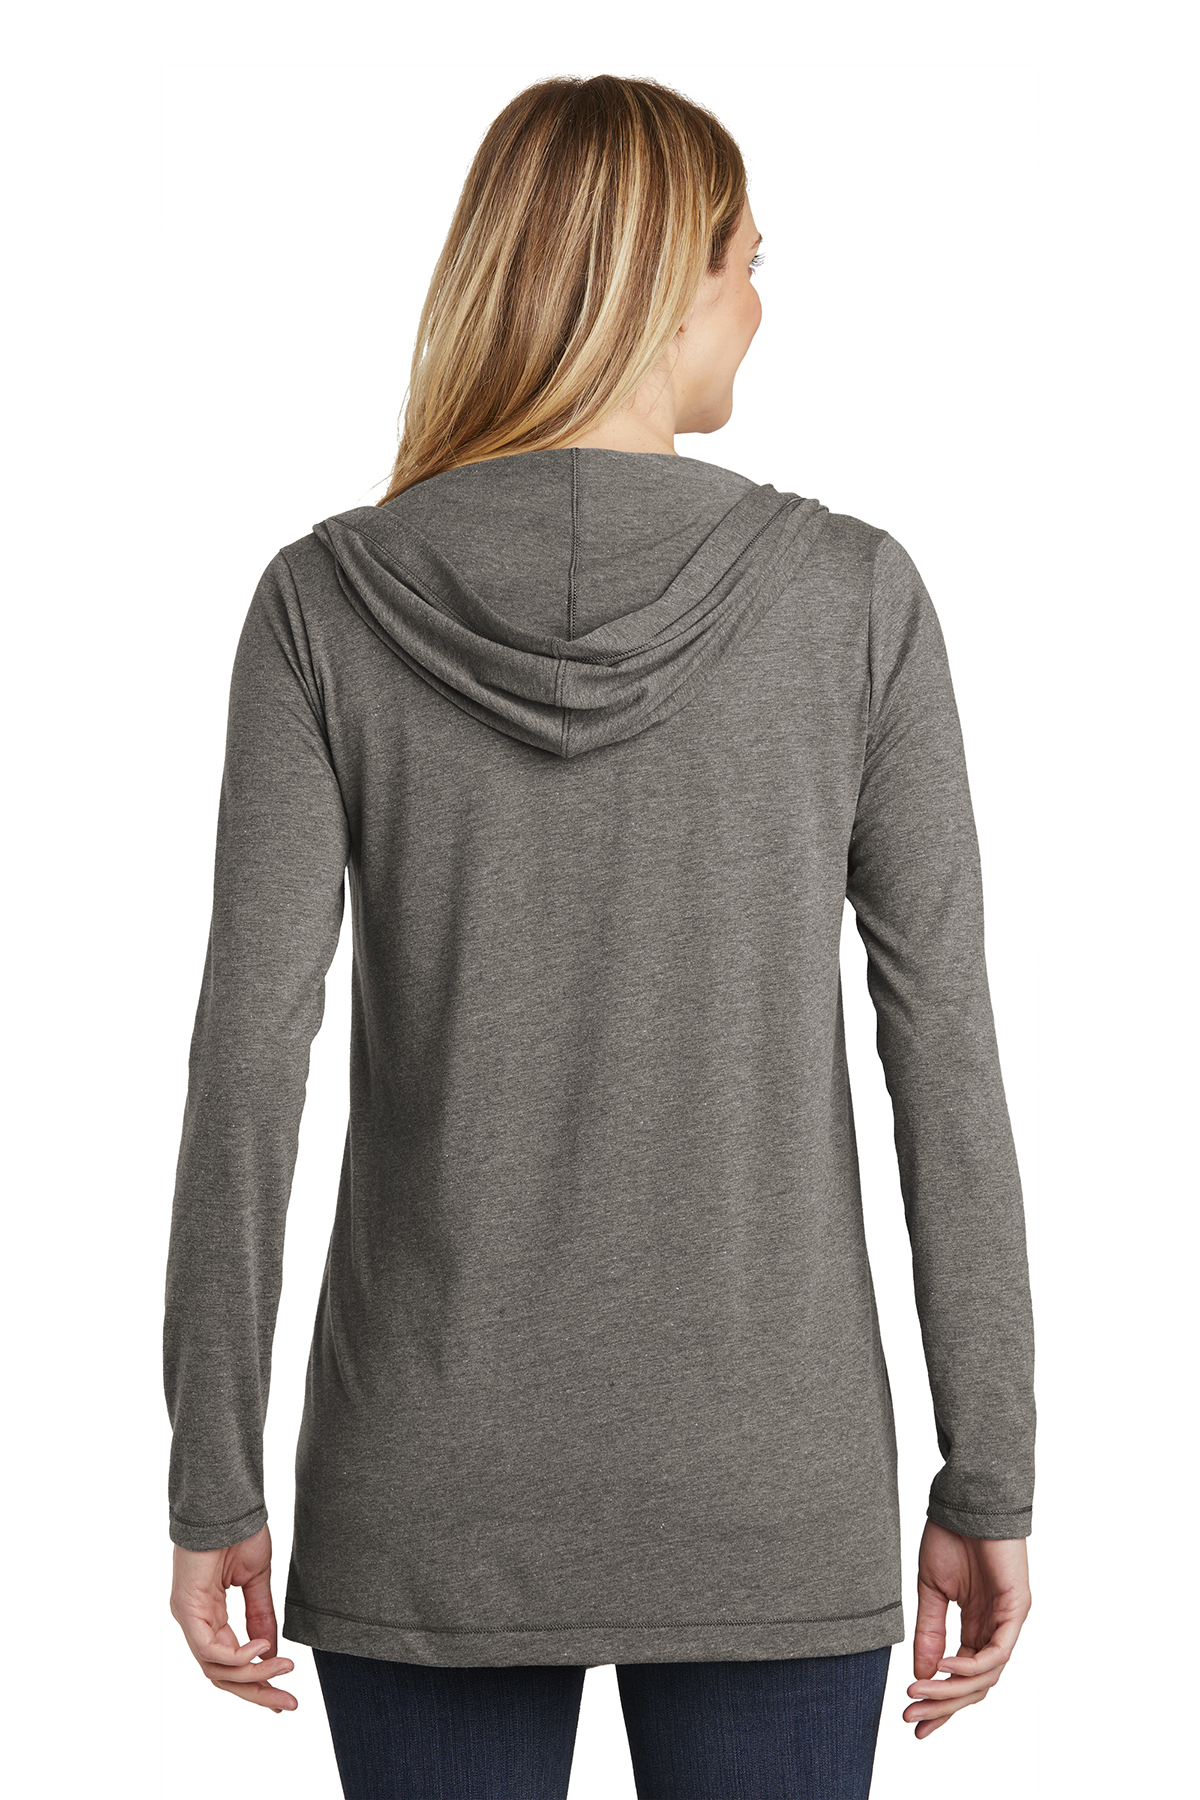 fleece cardigan sweatshirts for women images black and white